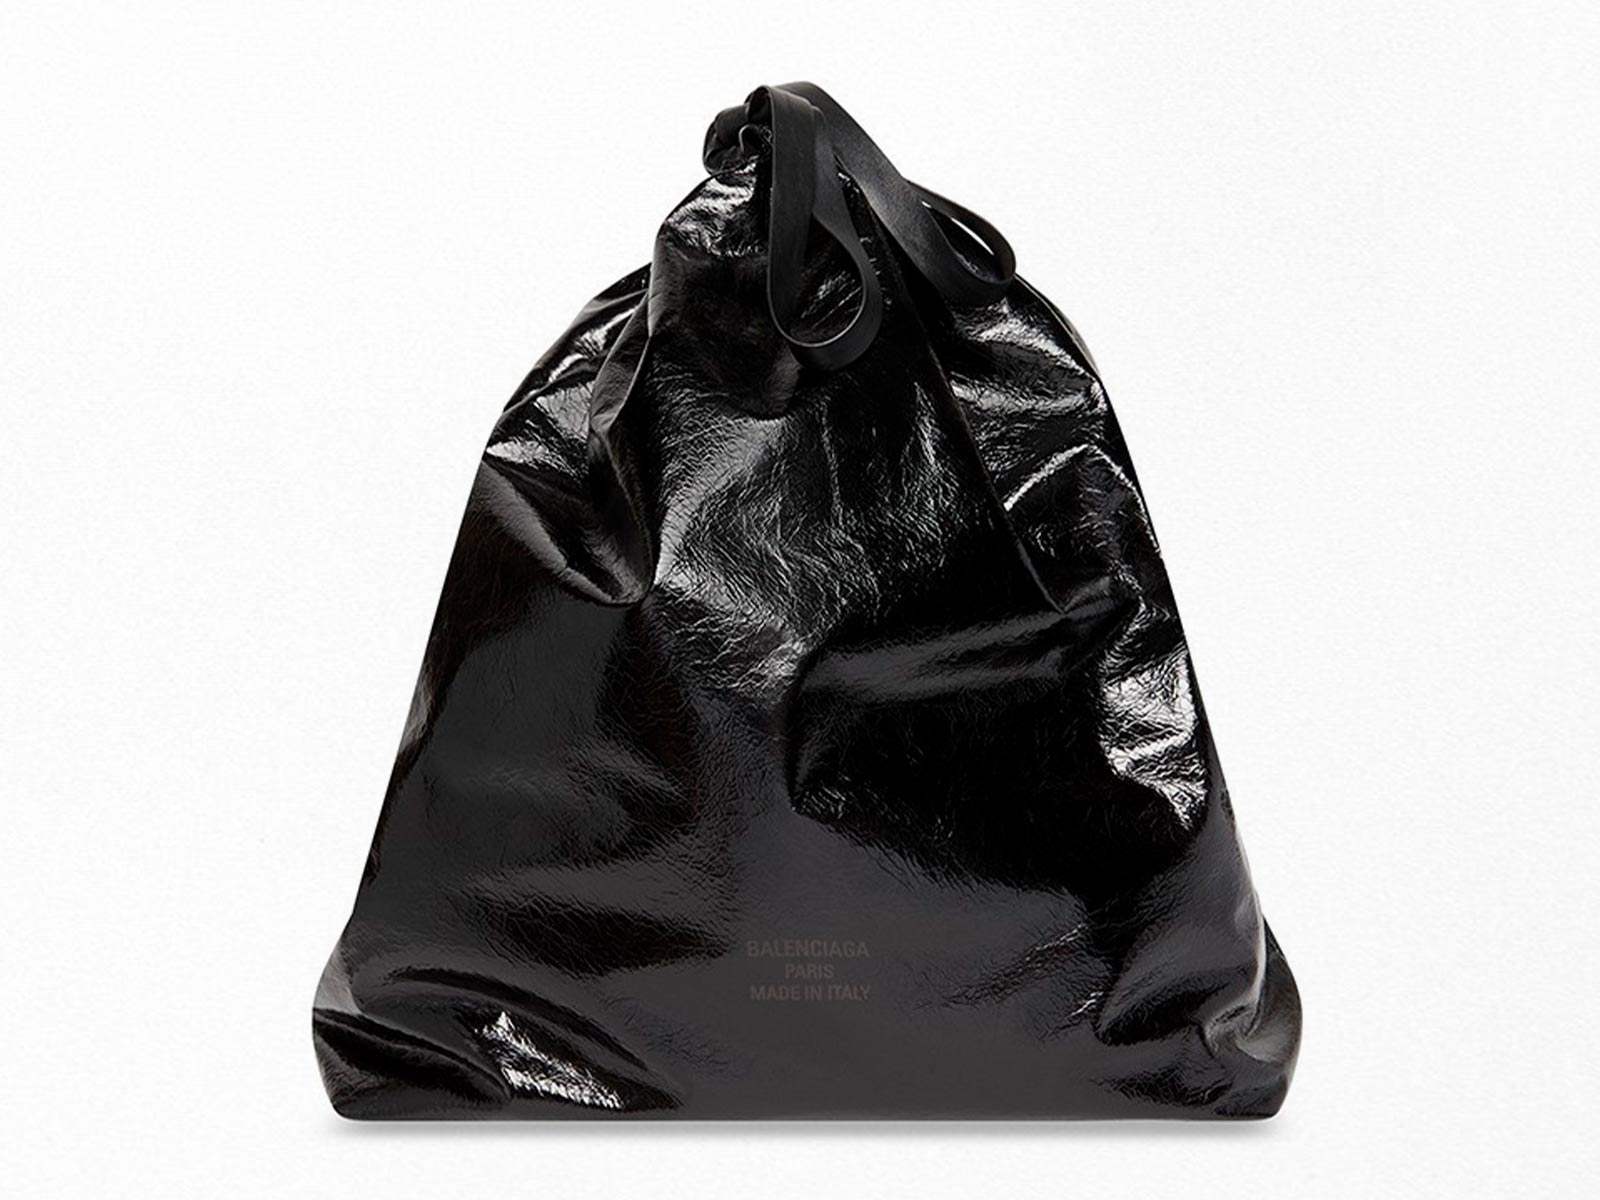 Una bolsa de basura por 1.400€… pero de Balenciaga